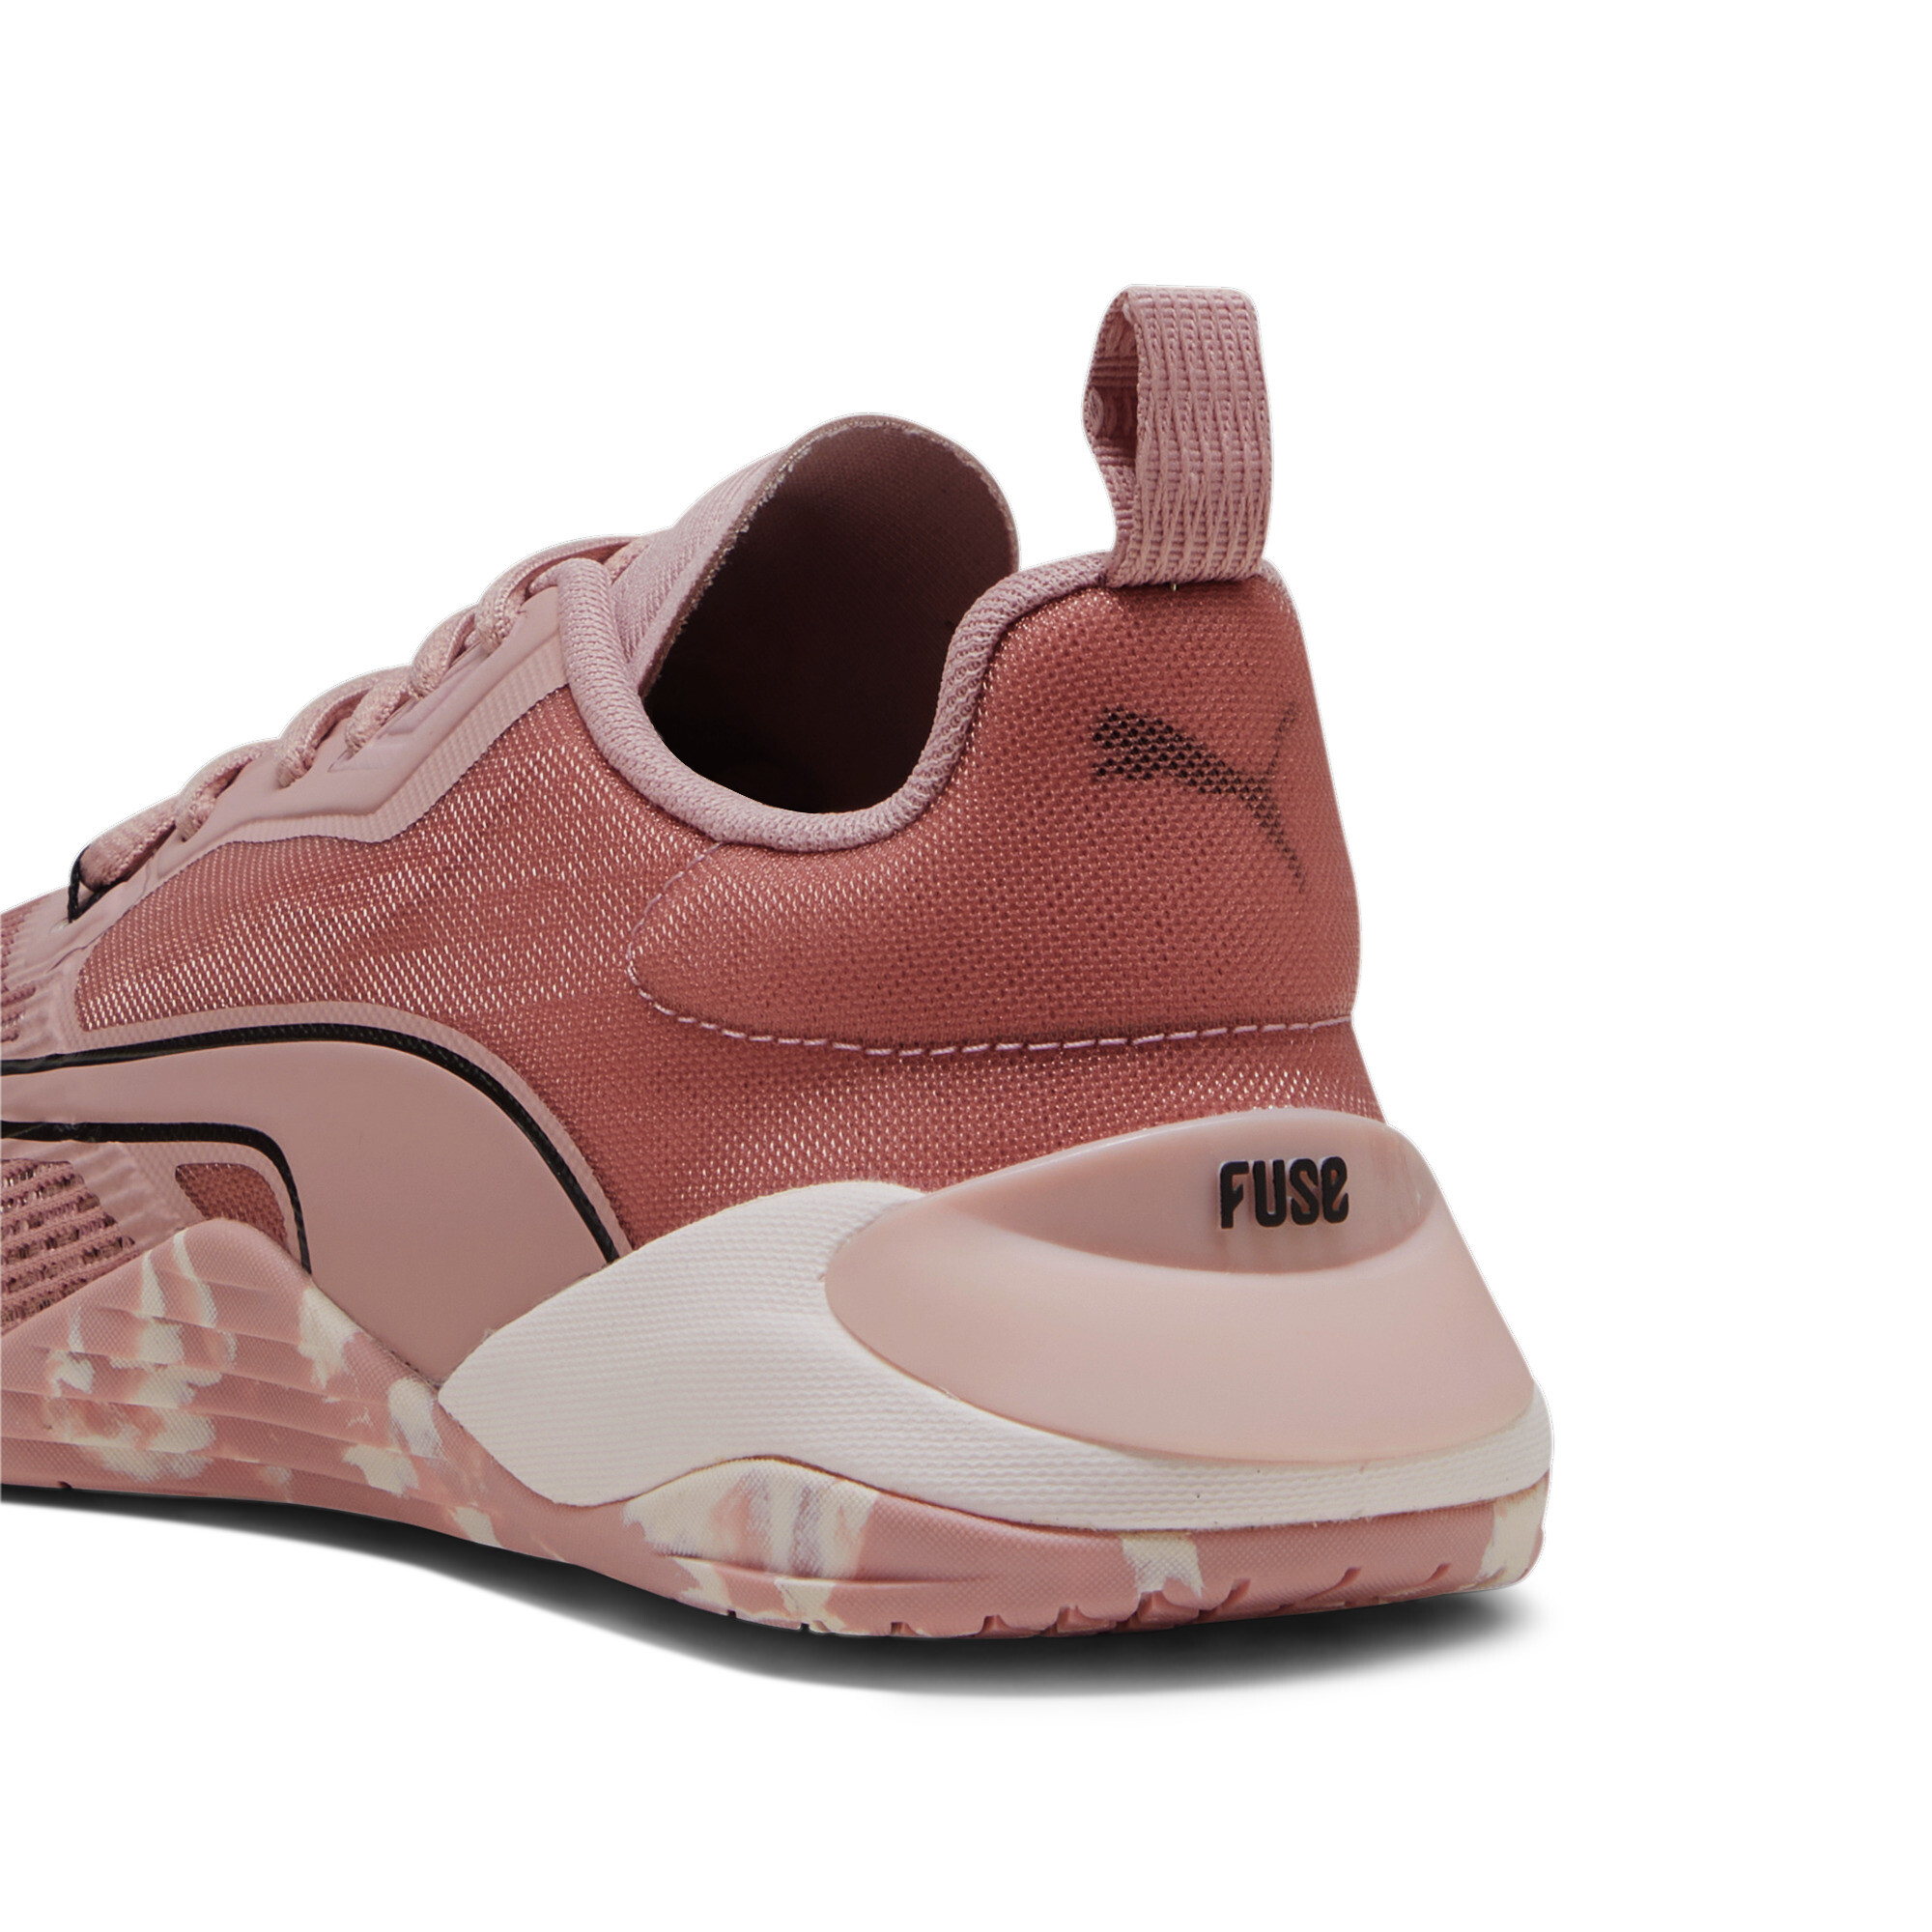 Women's PUMA Fuse 2.0 Training Shoes In Pink, Size EU 38.5